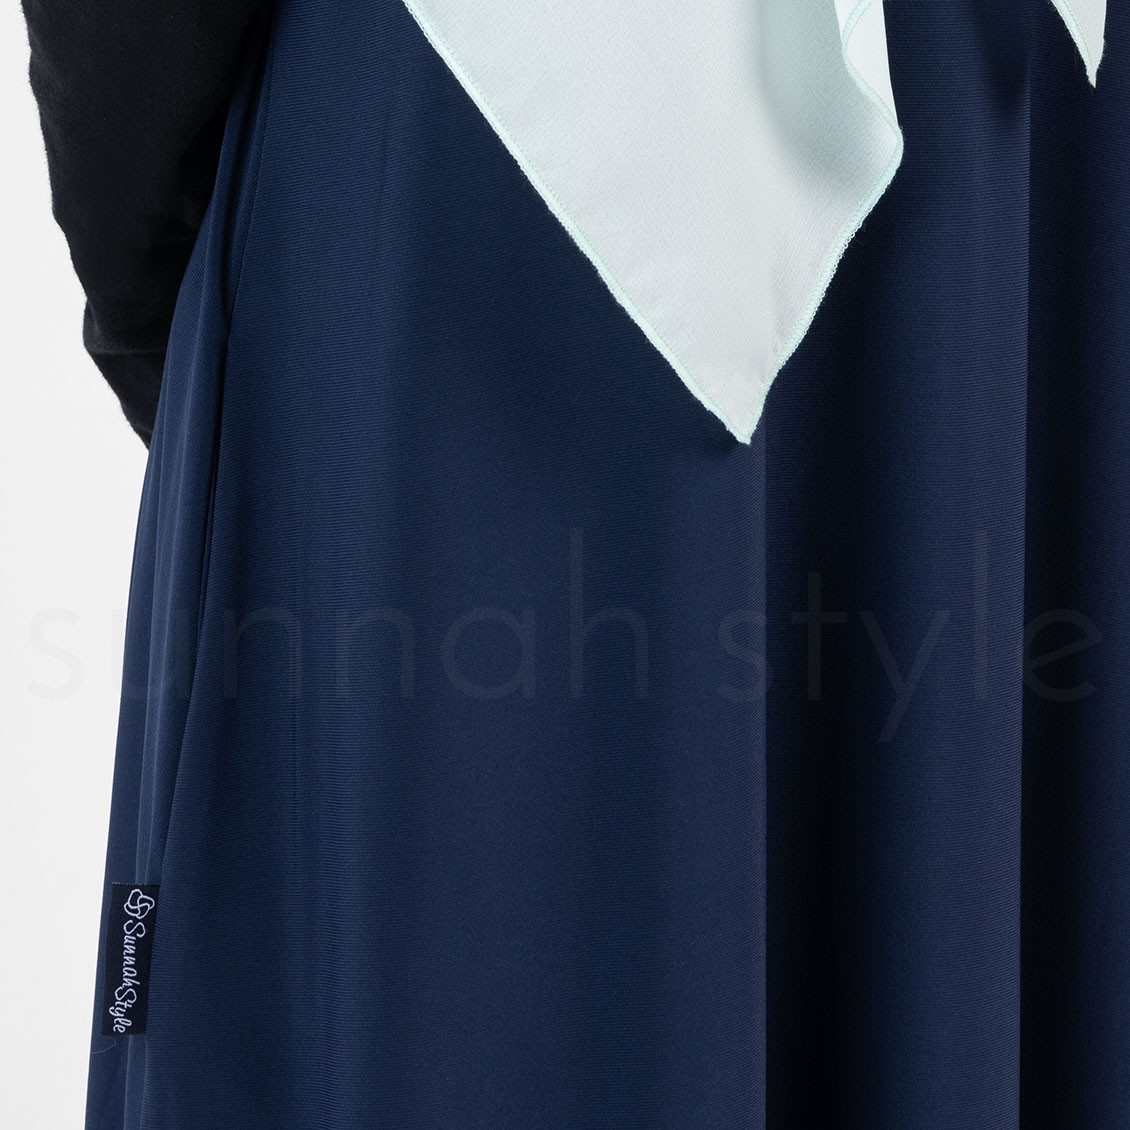 Sunnah Style Girls Sleeveless Jersey Abaya Navy Blue